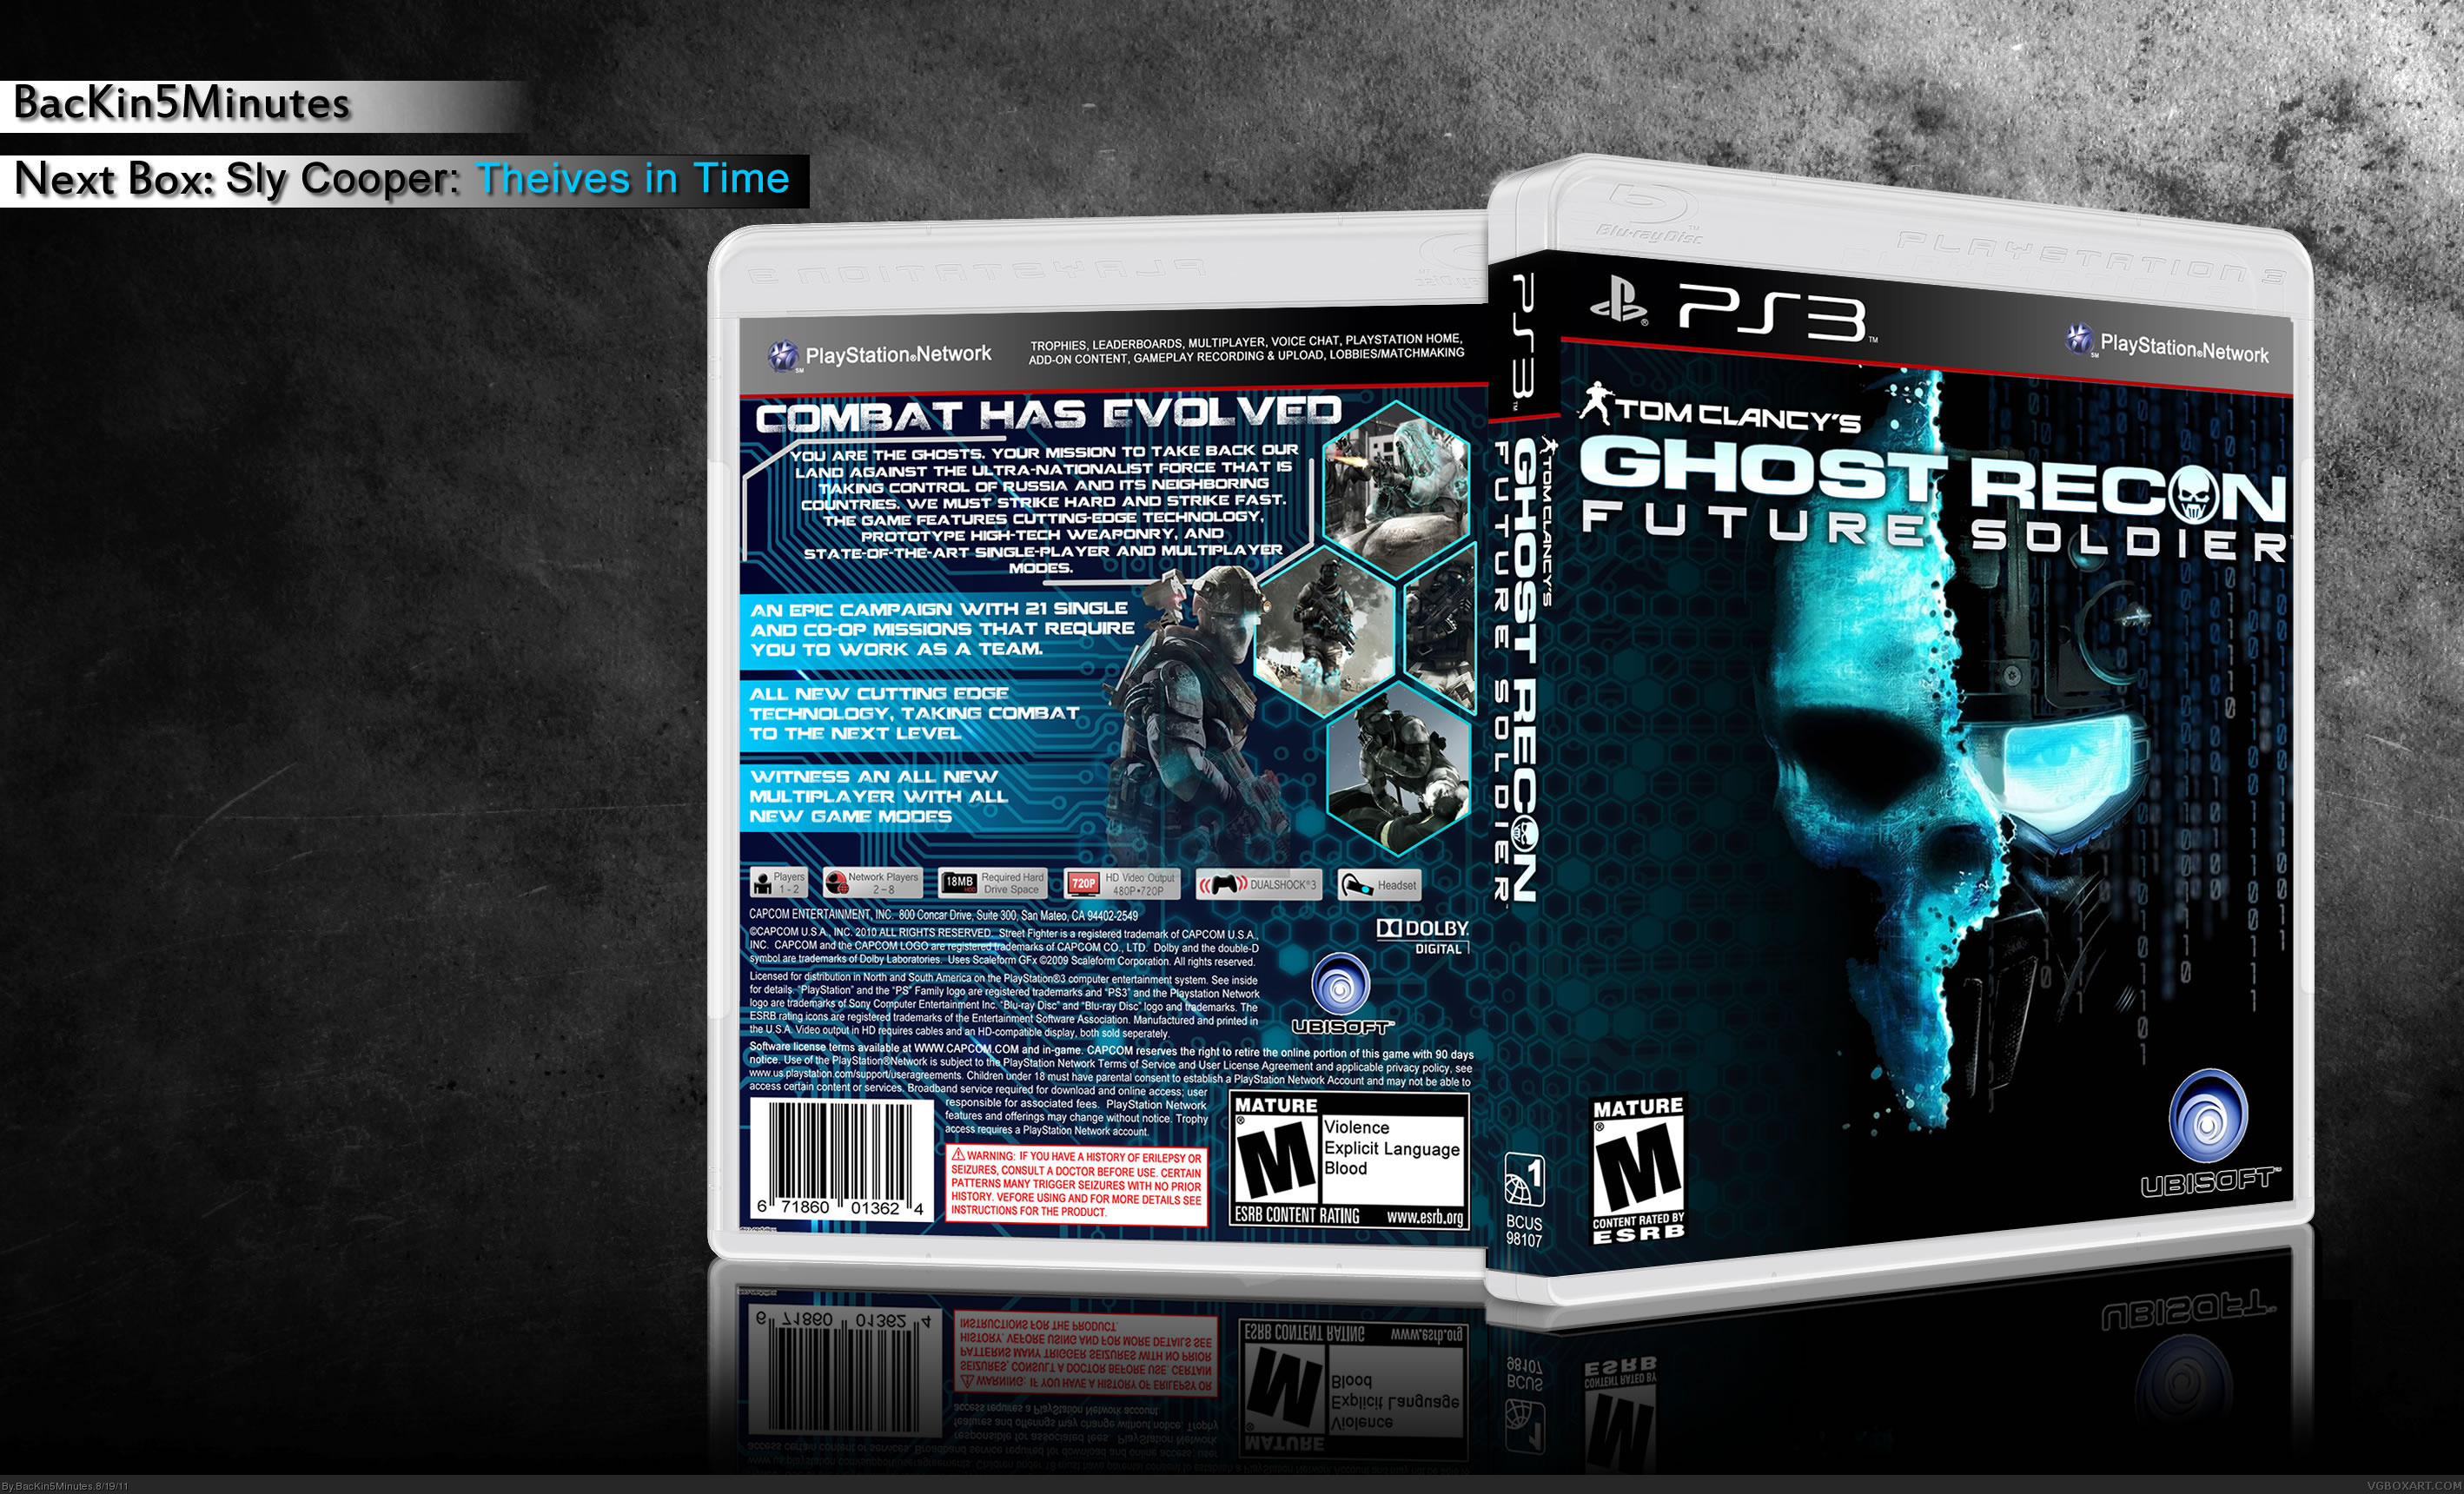 Tom Clancy's Ghost Recon: Future Soldier box cover